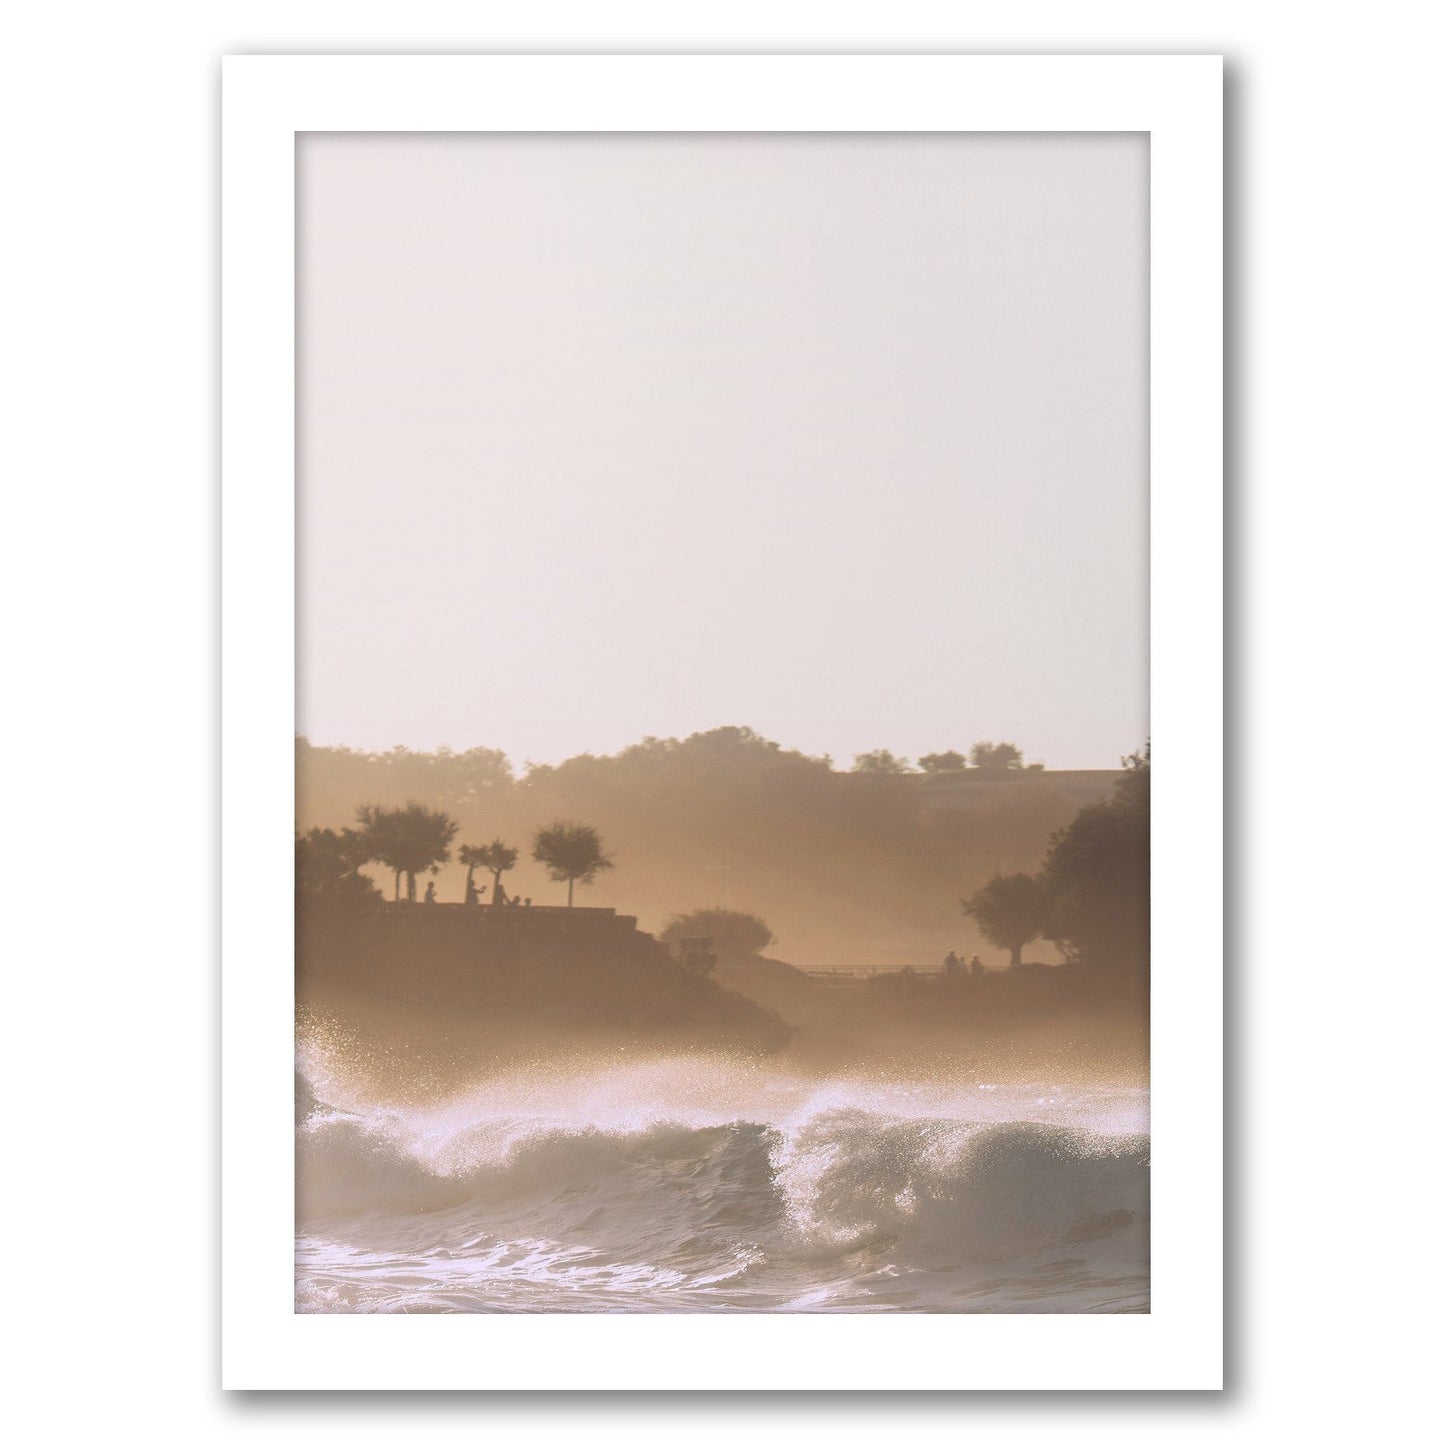 Sunset On Waves by Tanya Shumkina - Framed Print - Americanflat